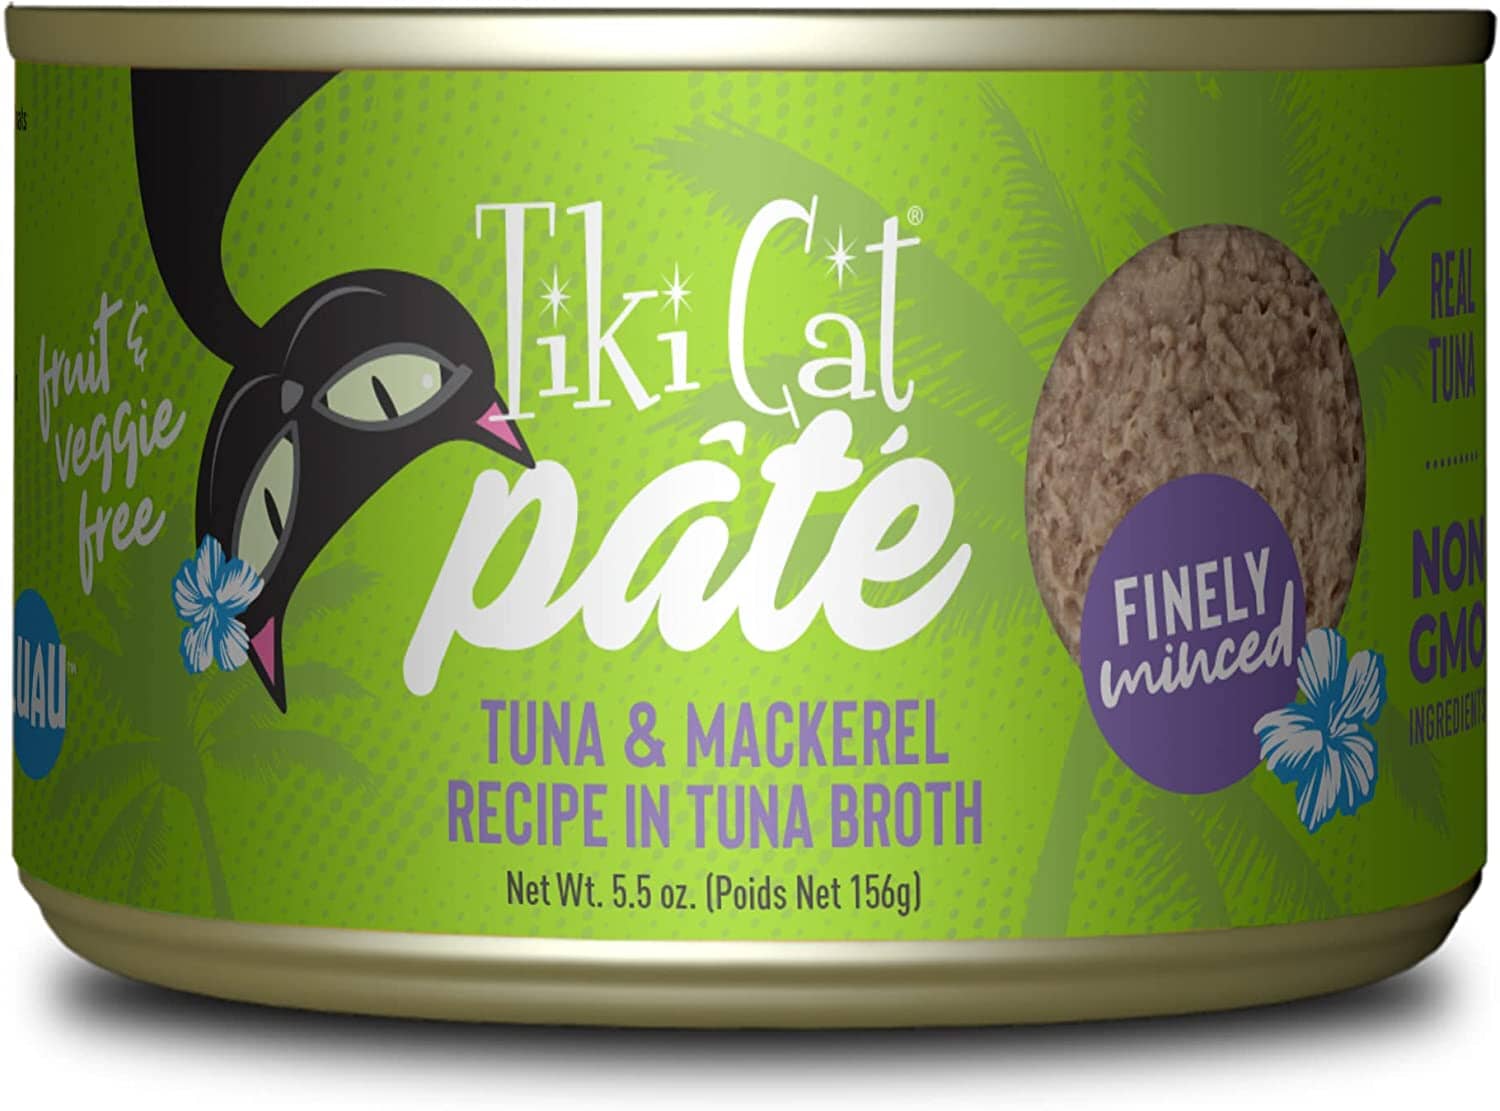 Tiki Cat Ahi Tuna & Mackerel Pate Luau Canned Cat Food - 5.5 Oz - Case of 8  